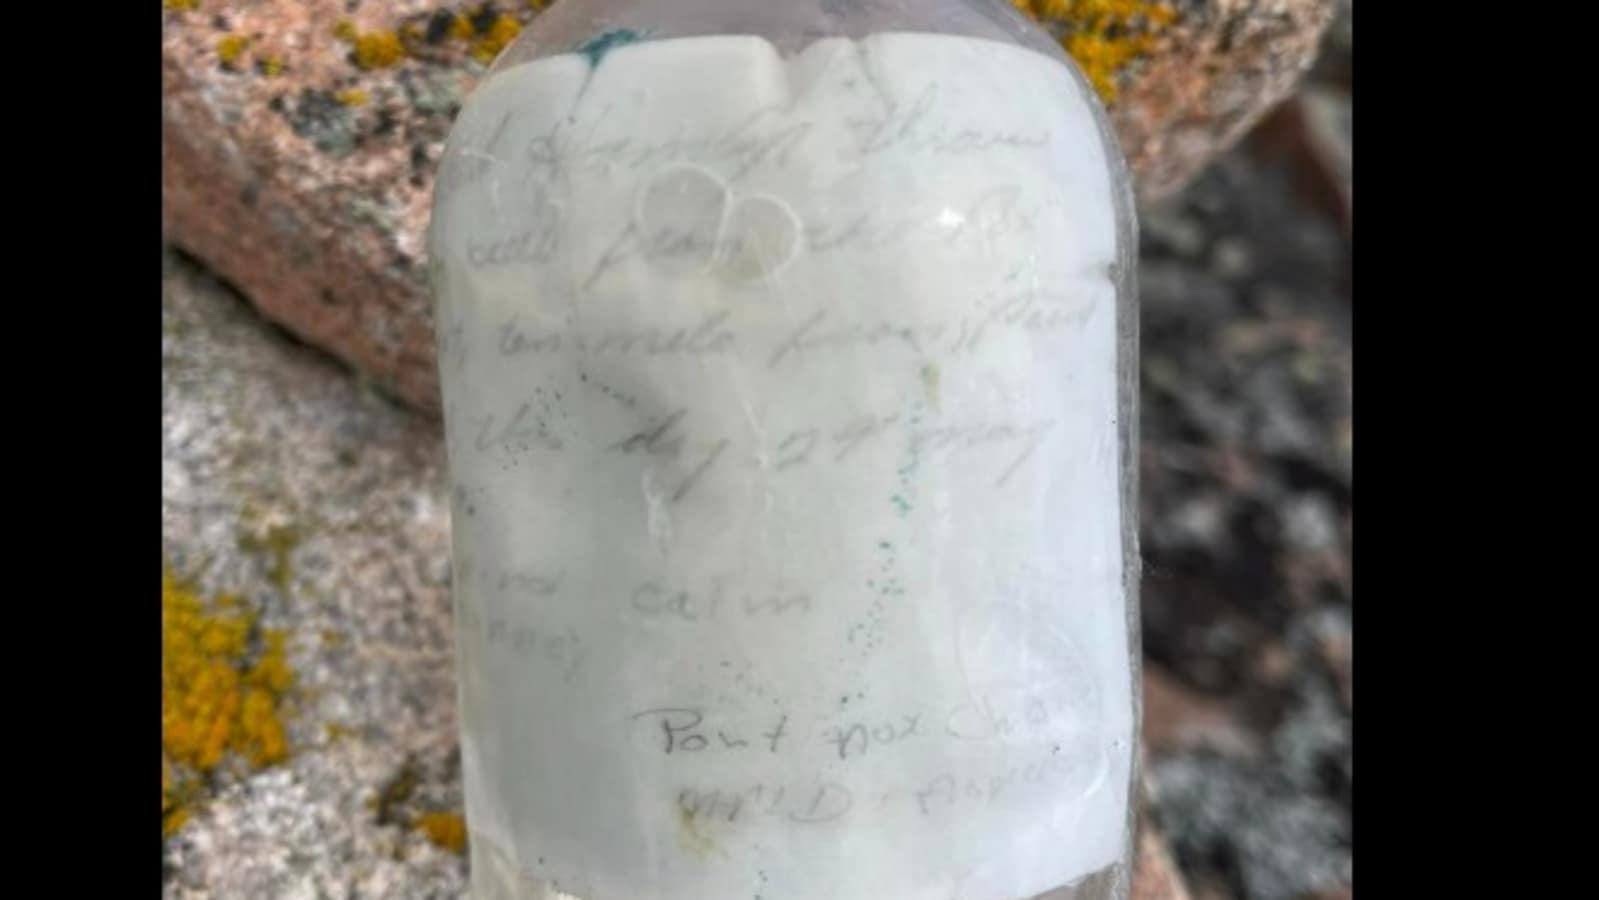 Message from 1989 hidden inside a plastic bottle, recovered | Trending